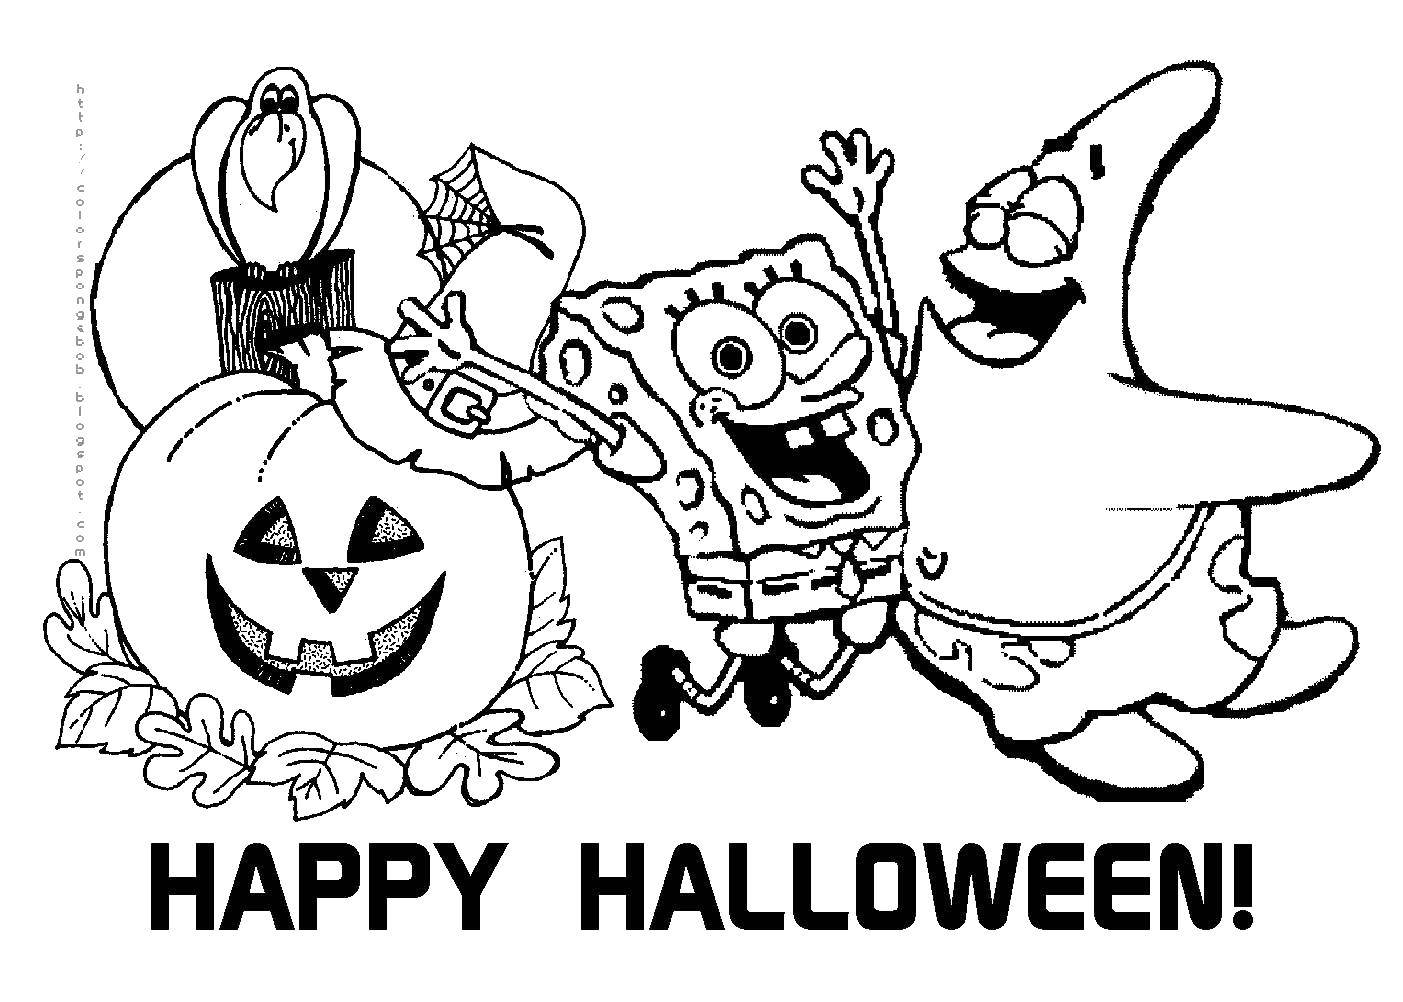 Coloring Happy Halloween. Category Spongebob. Tags:  The spongebob, Patrick, Halloween, cartoons.